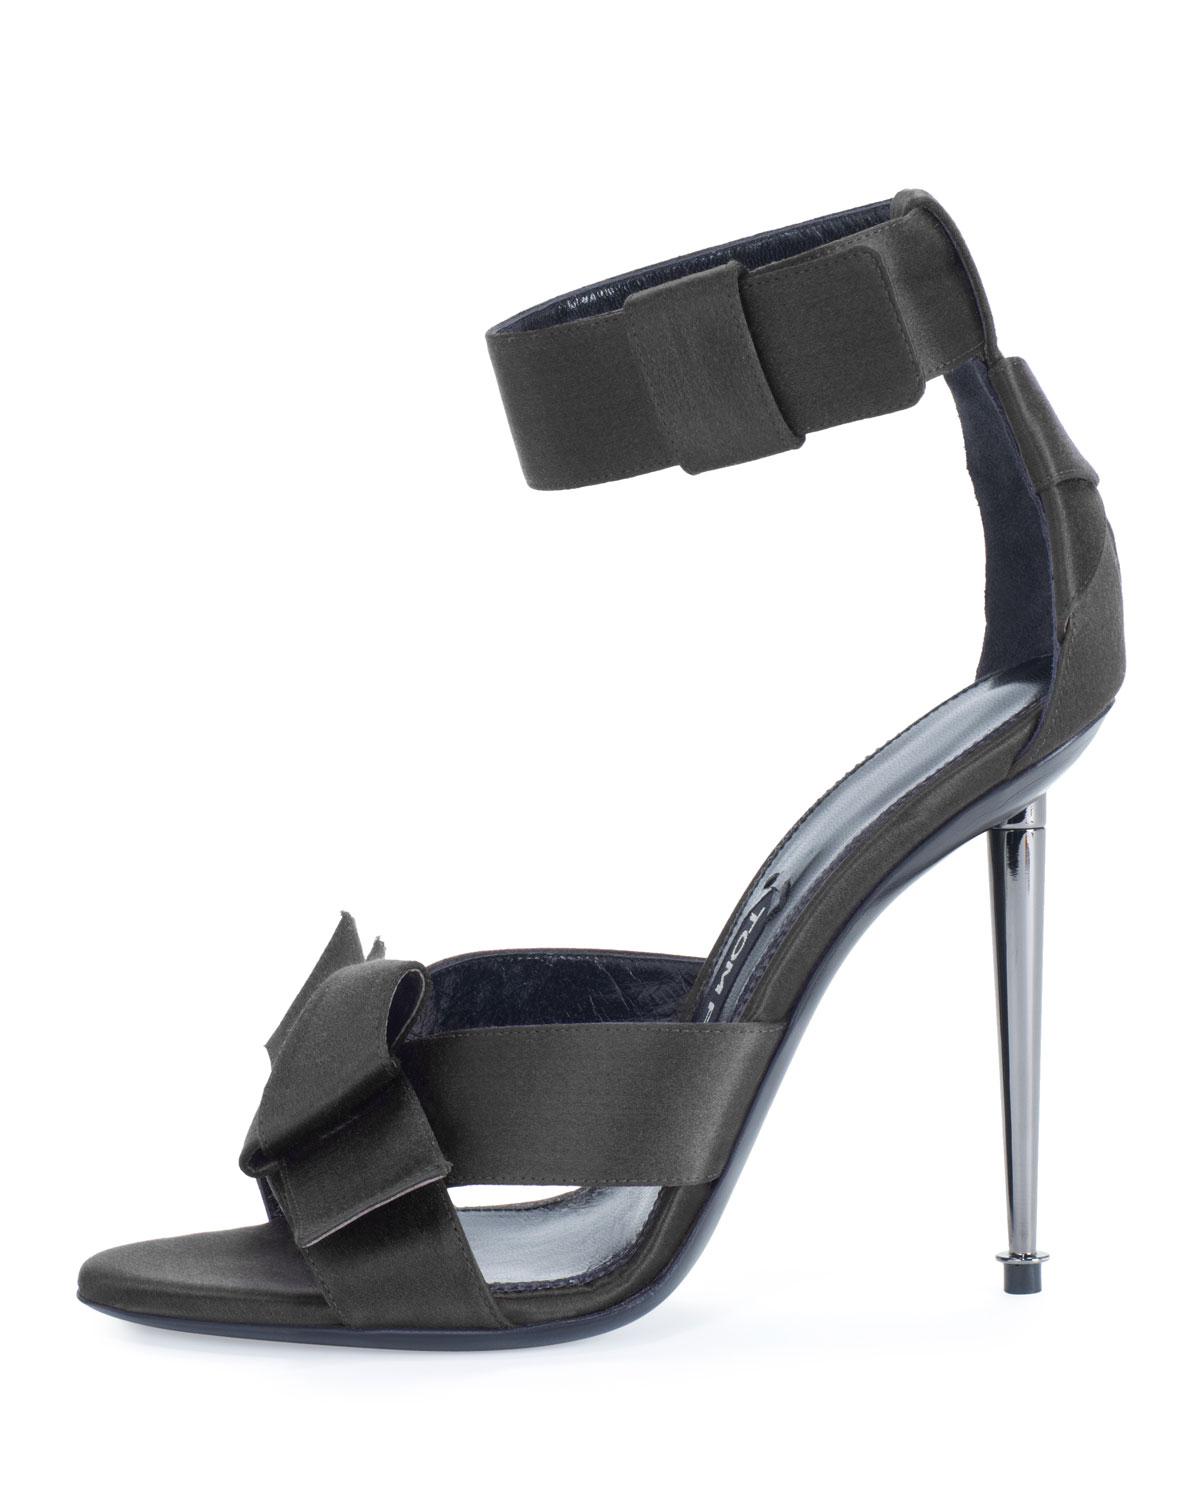 Tom Ford Satin Ankle-strap Sandal in Black - Lyst